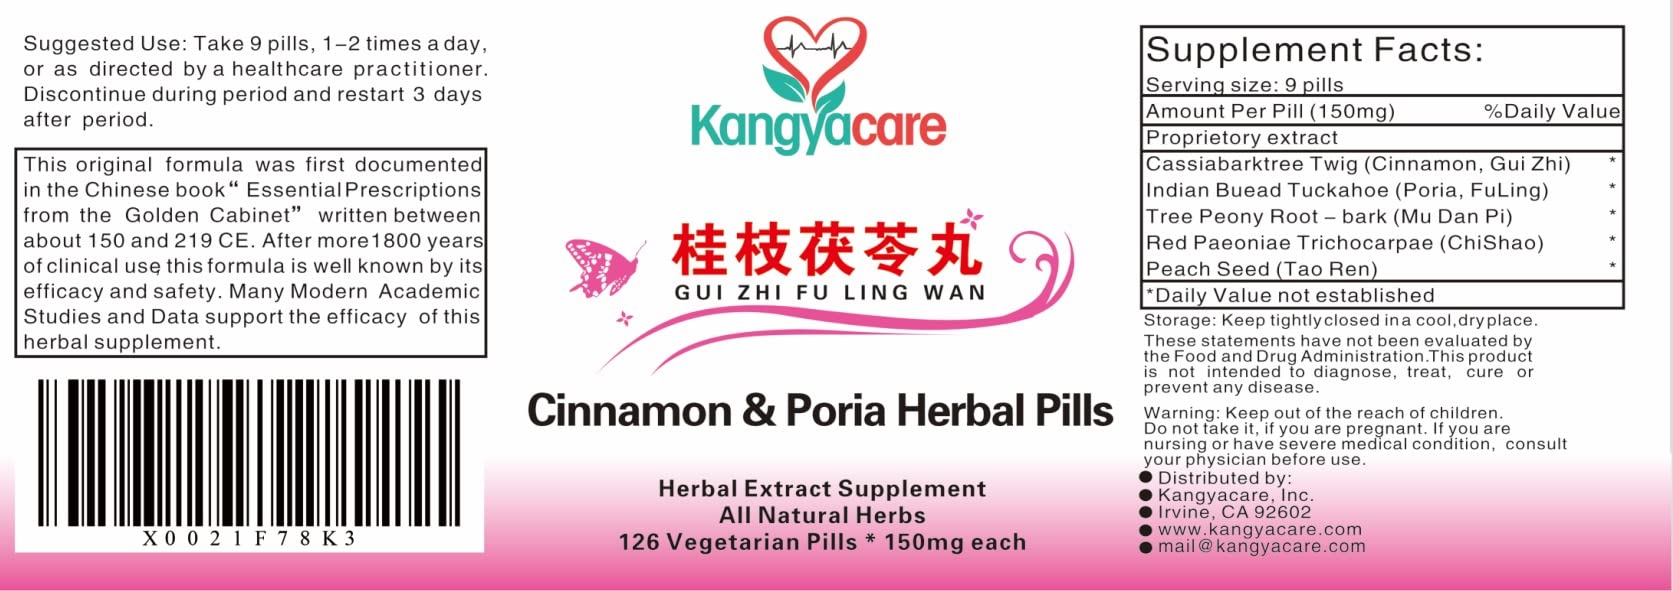 [Kangyacare] GUI Zhi Fu Ling Wan - Cinnamon & Poria Pills - Natural Cycle Relief - Help Menstrual Cramps, Pelvic Cramping, Bloating, Period Pain - Promote Women's Health - 100% Natural (1 Bottle)